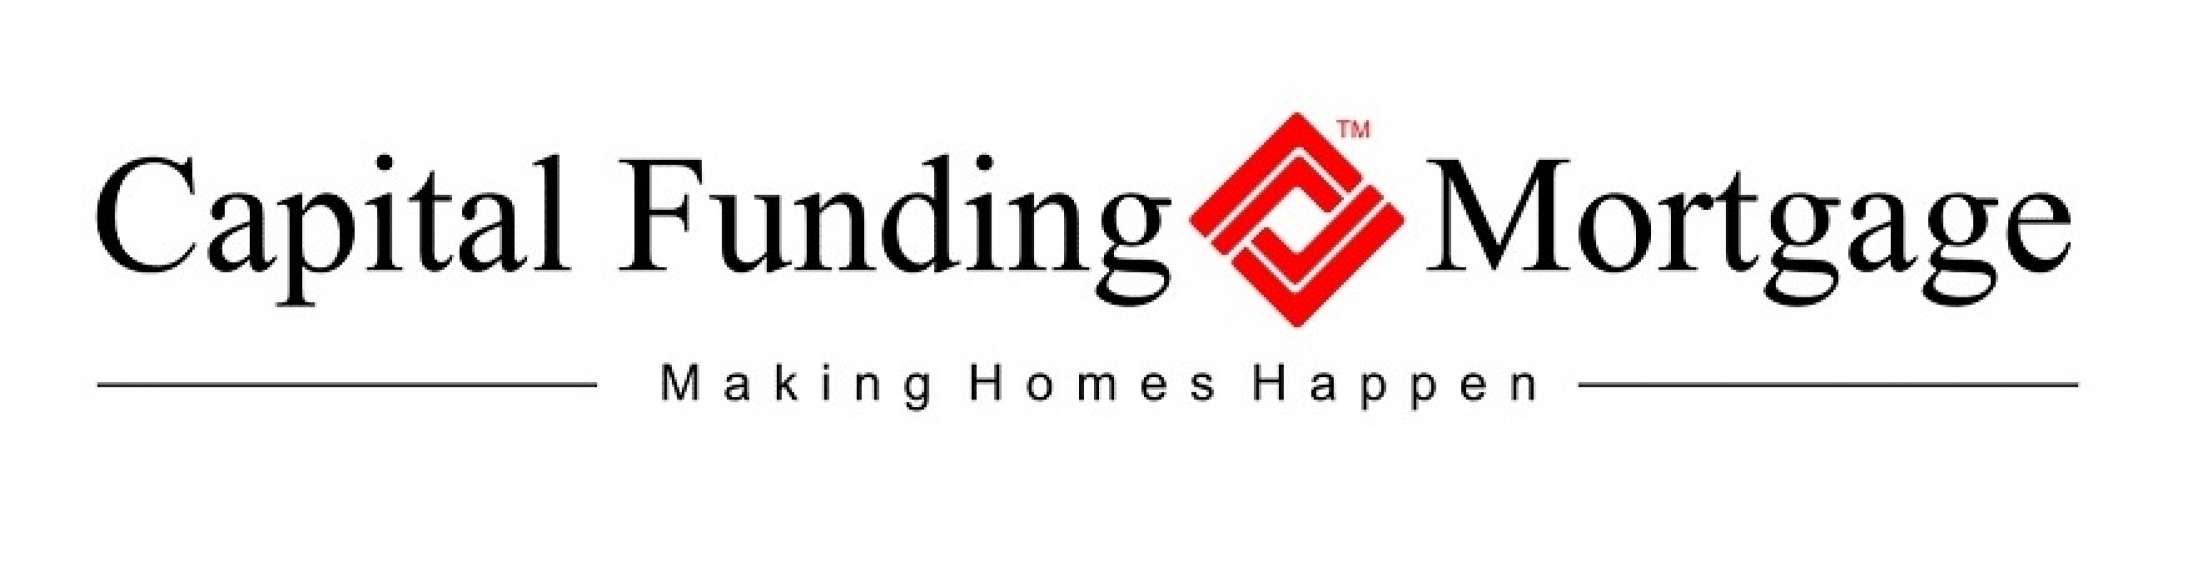 Capital Funding Mortgage Associates, Inc. Logo